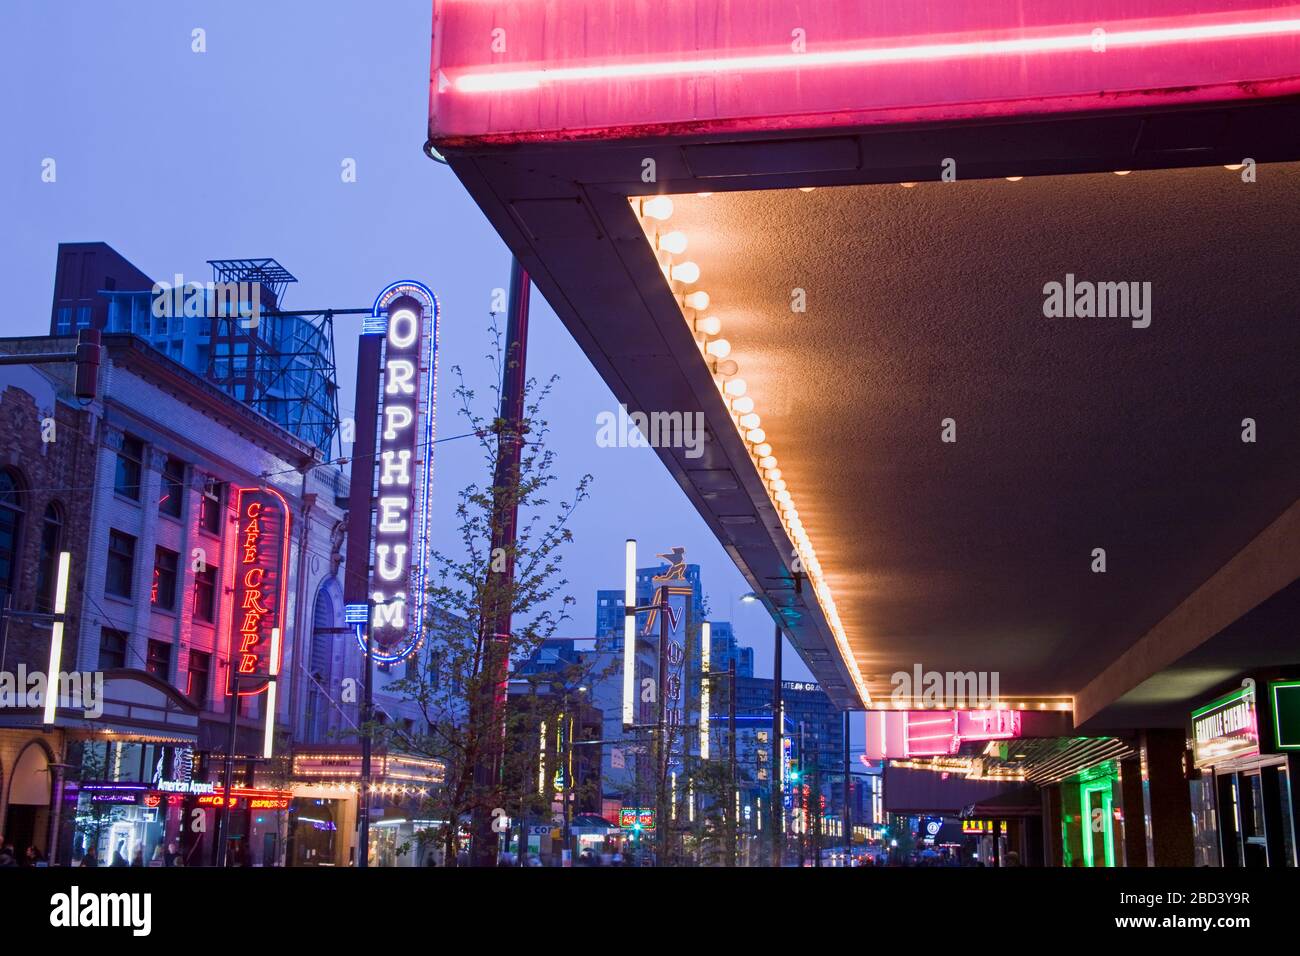 Orpheum Theatre on Granville Street, Vancouver, British Columbia, Canada, North America Stock Photo